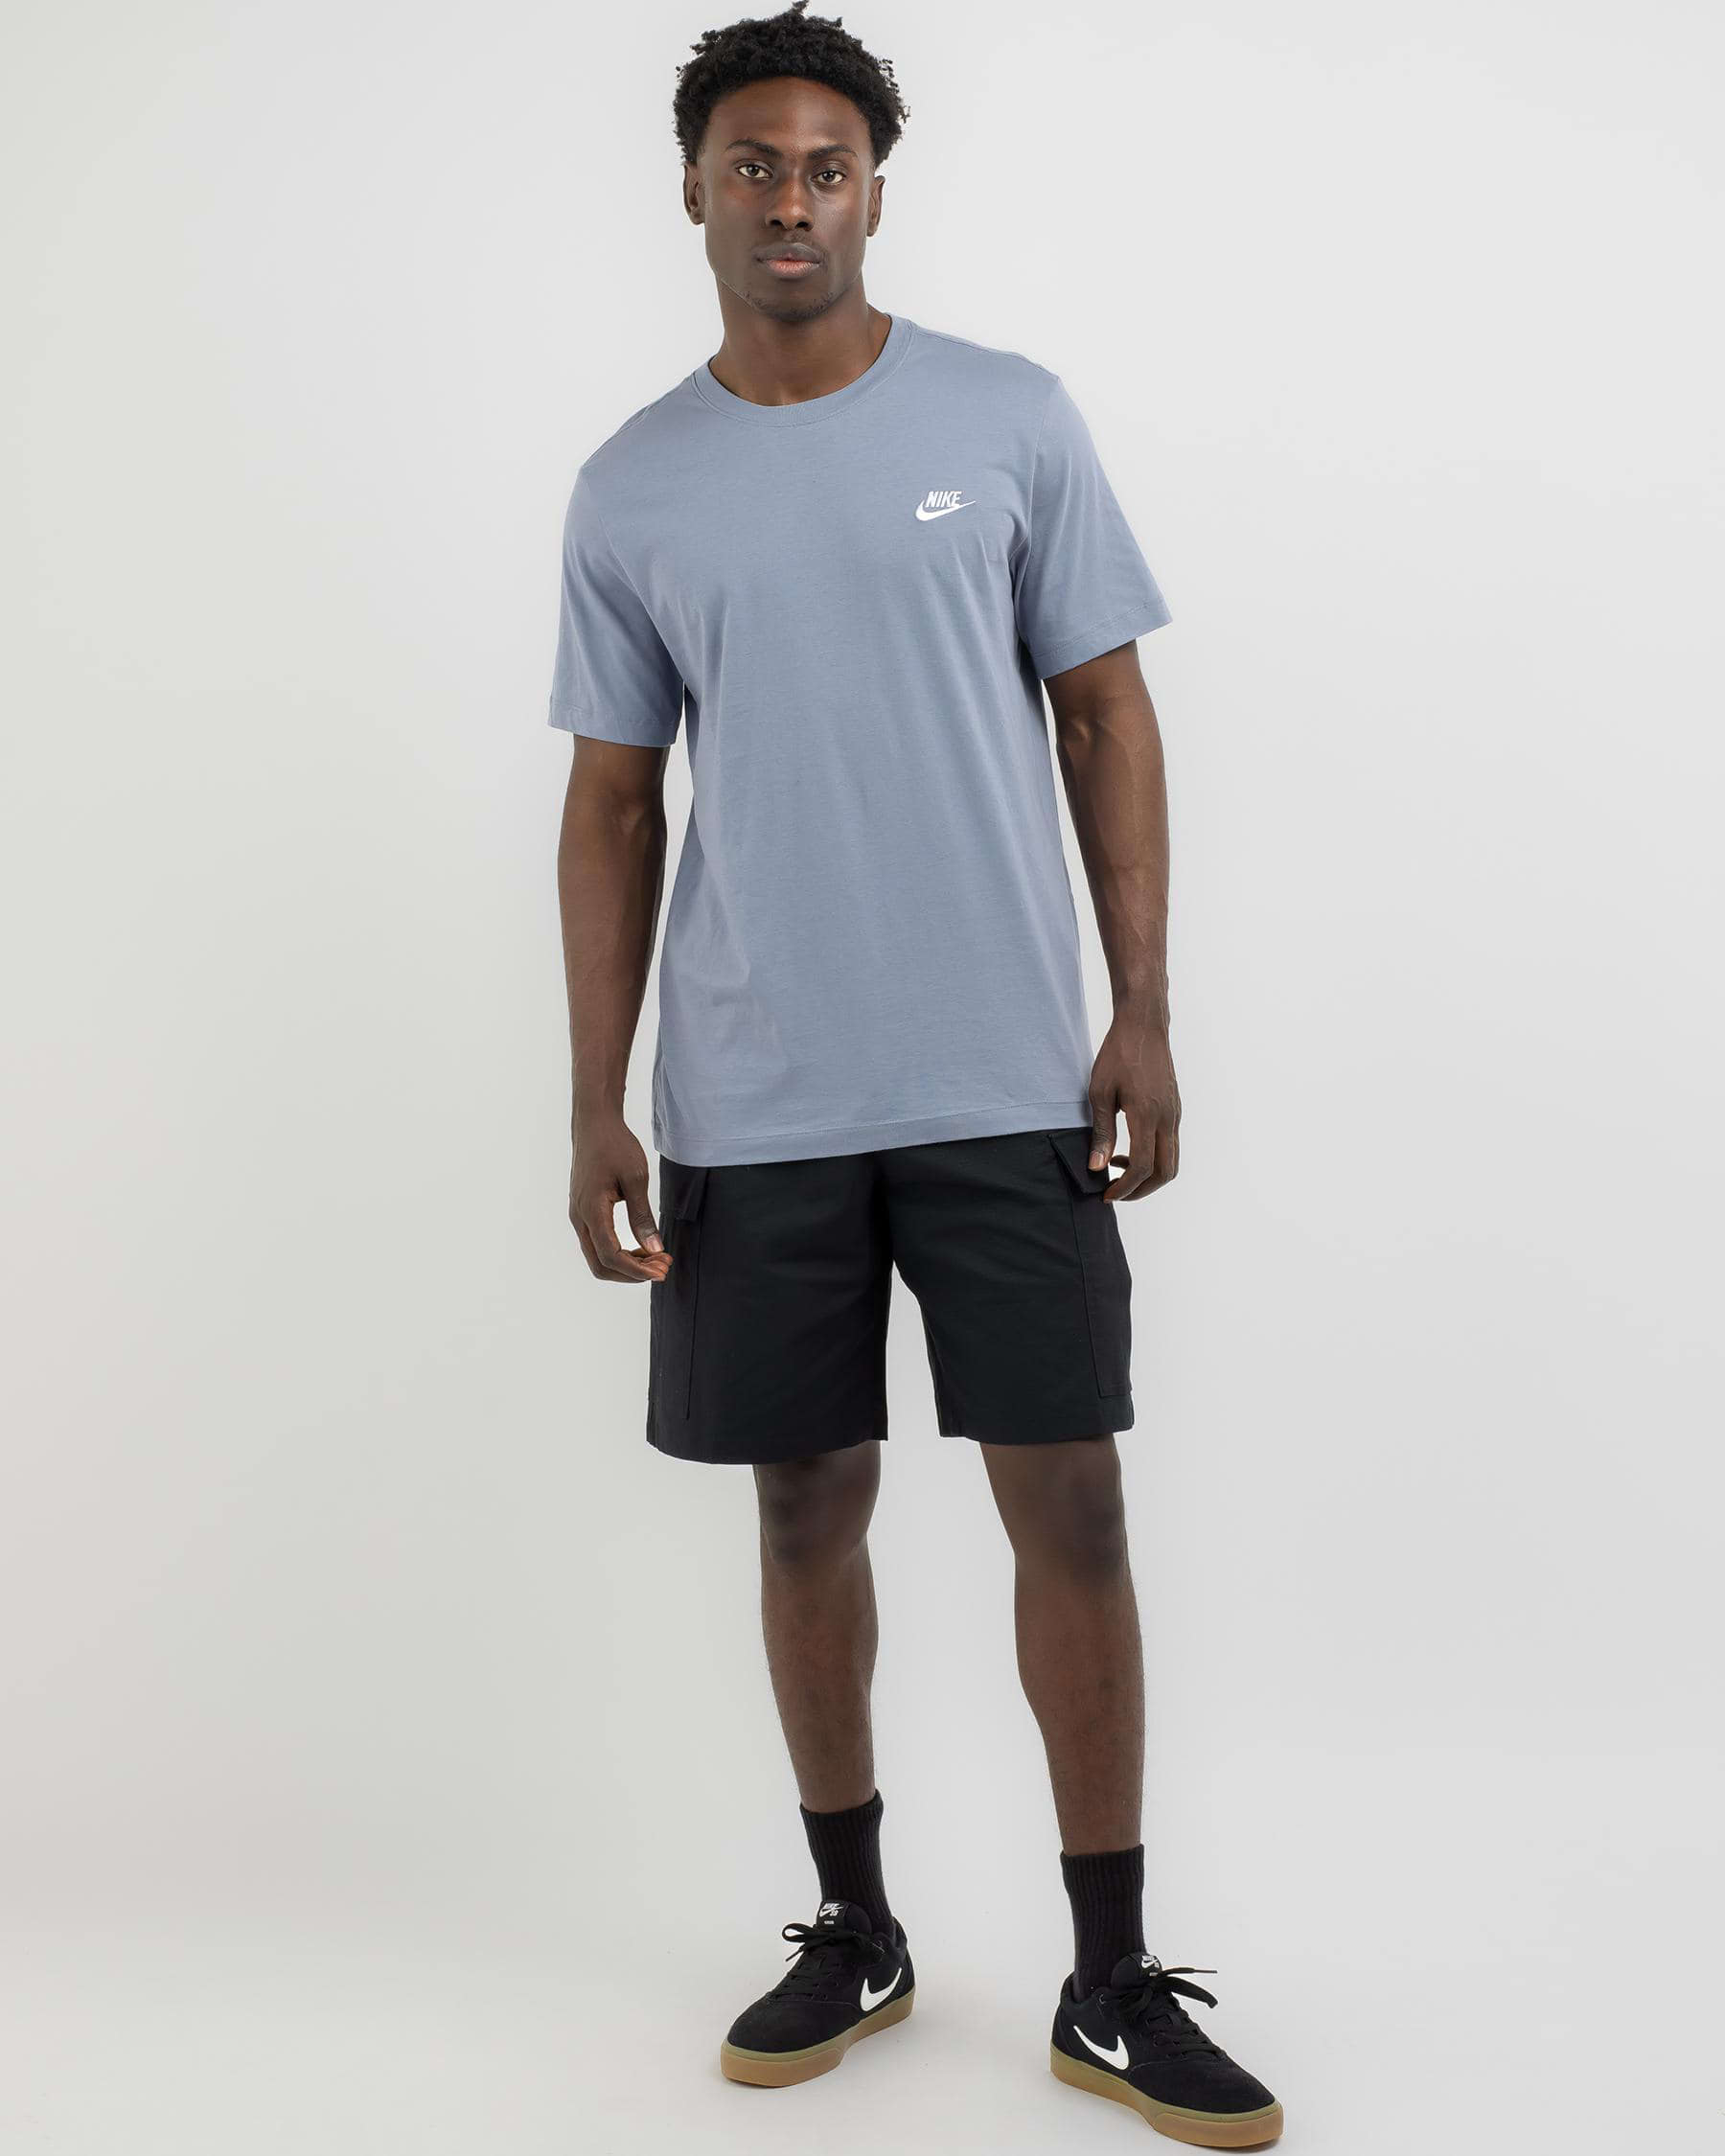 Shop Nike SB Kearny Cargo Shorts In Black/white - Fast Shipping & Easy ...